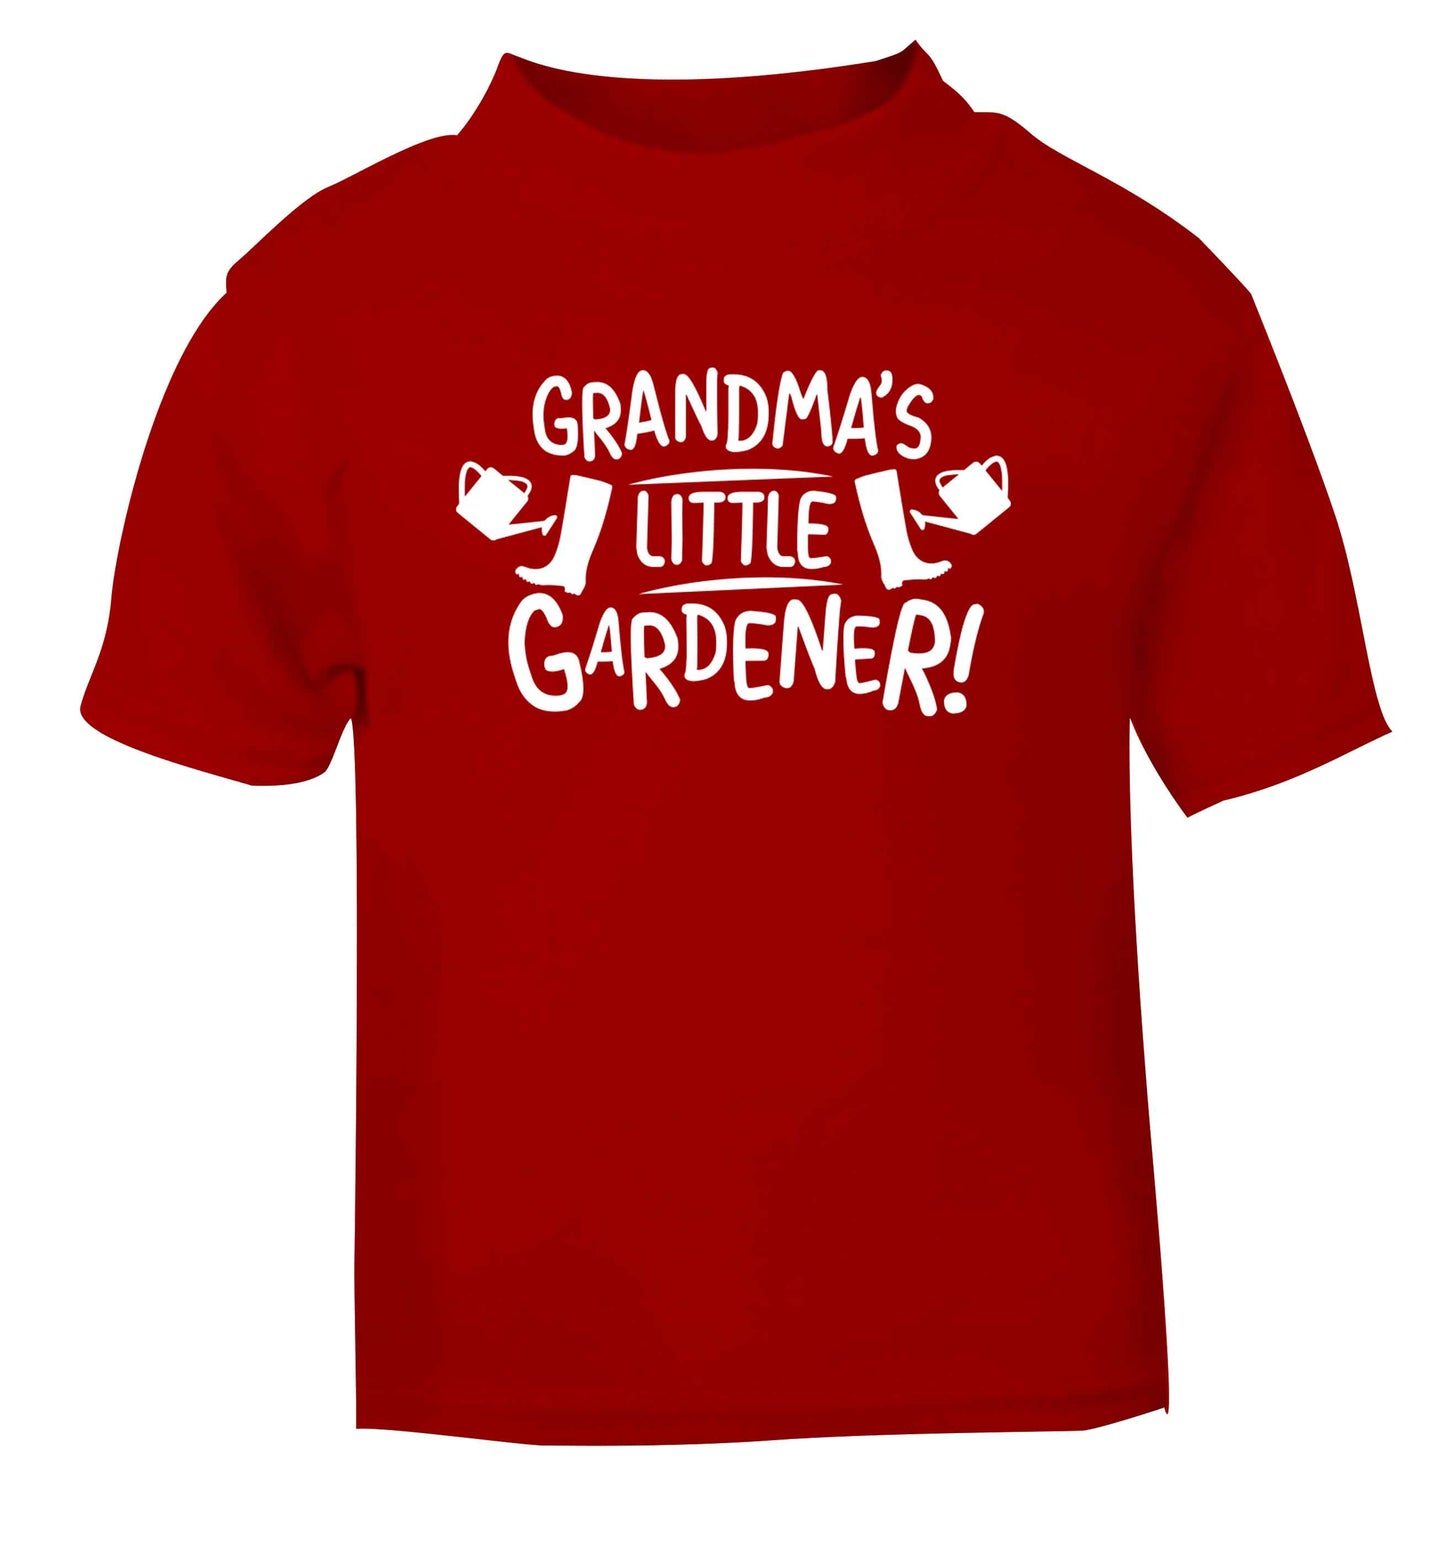 Grandma's little gardener red Baby Toddler Tshirt 2 Years